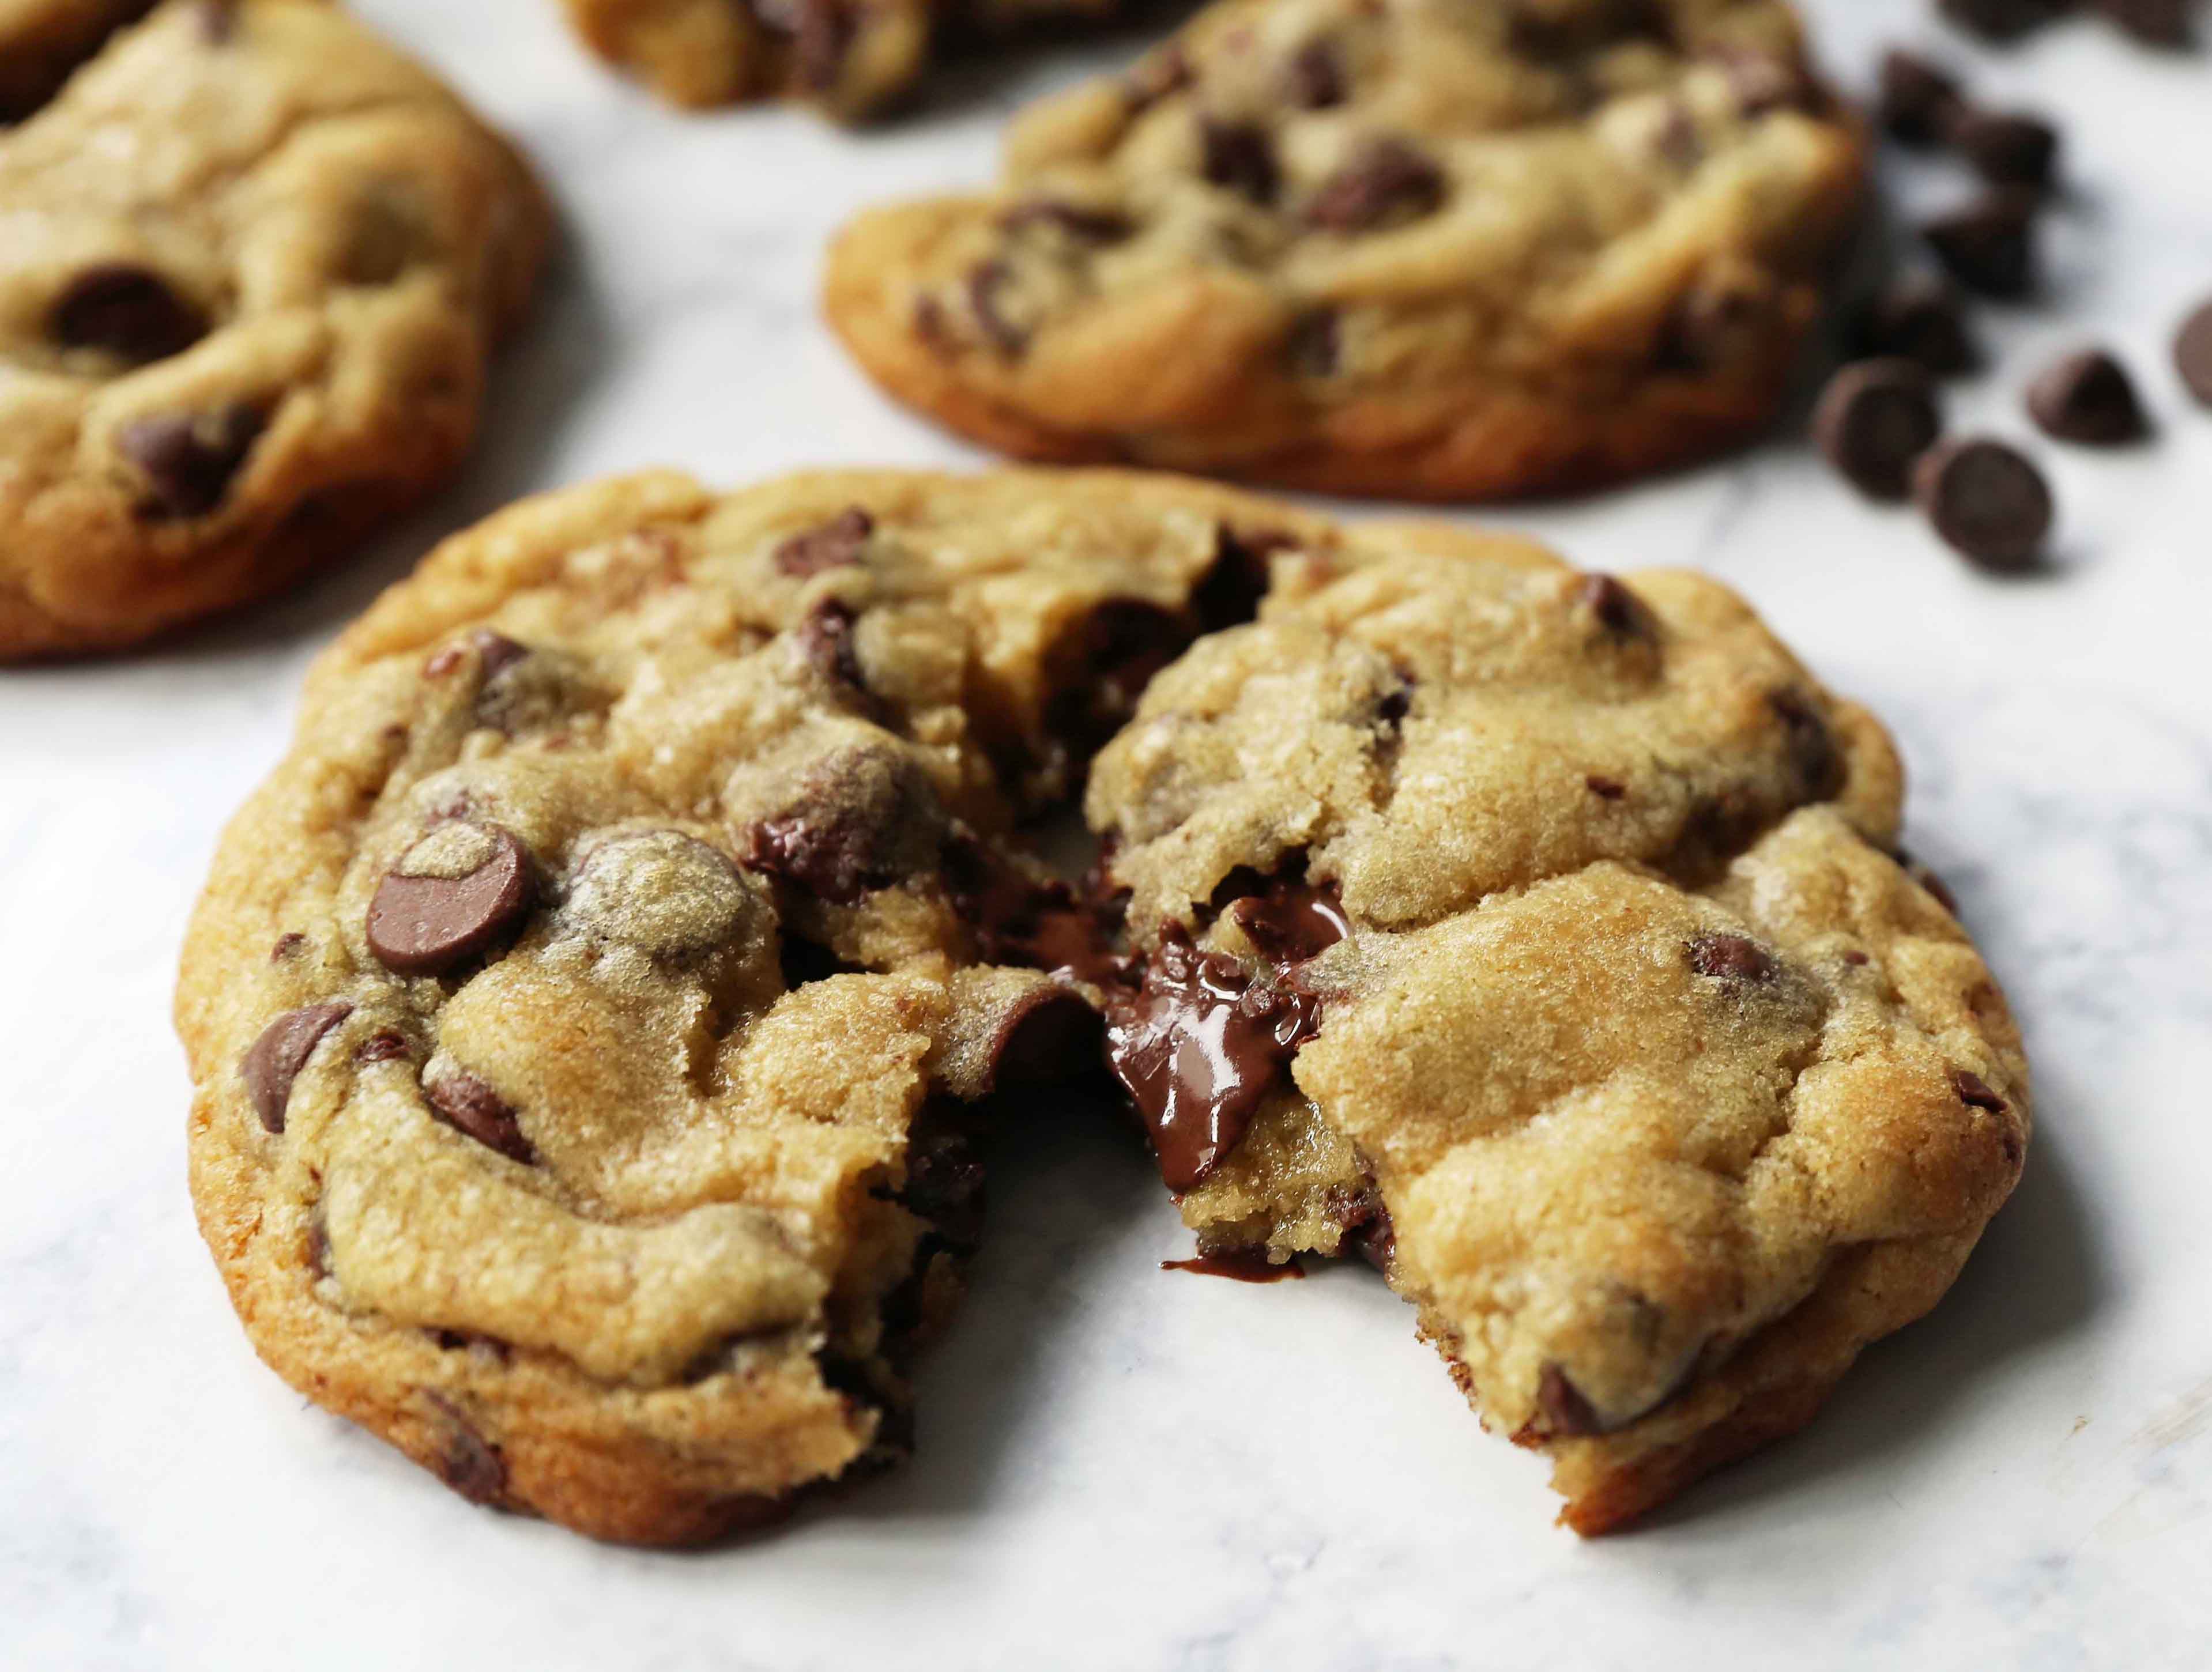 https://www.modernhoney.com/wp-content/uploads/2019/01/The-Best-Chocolate-Chip-Cookies-12.jpg